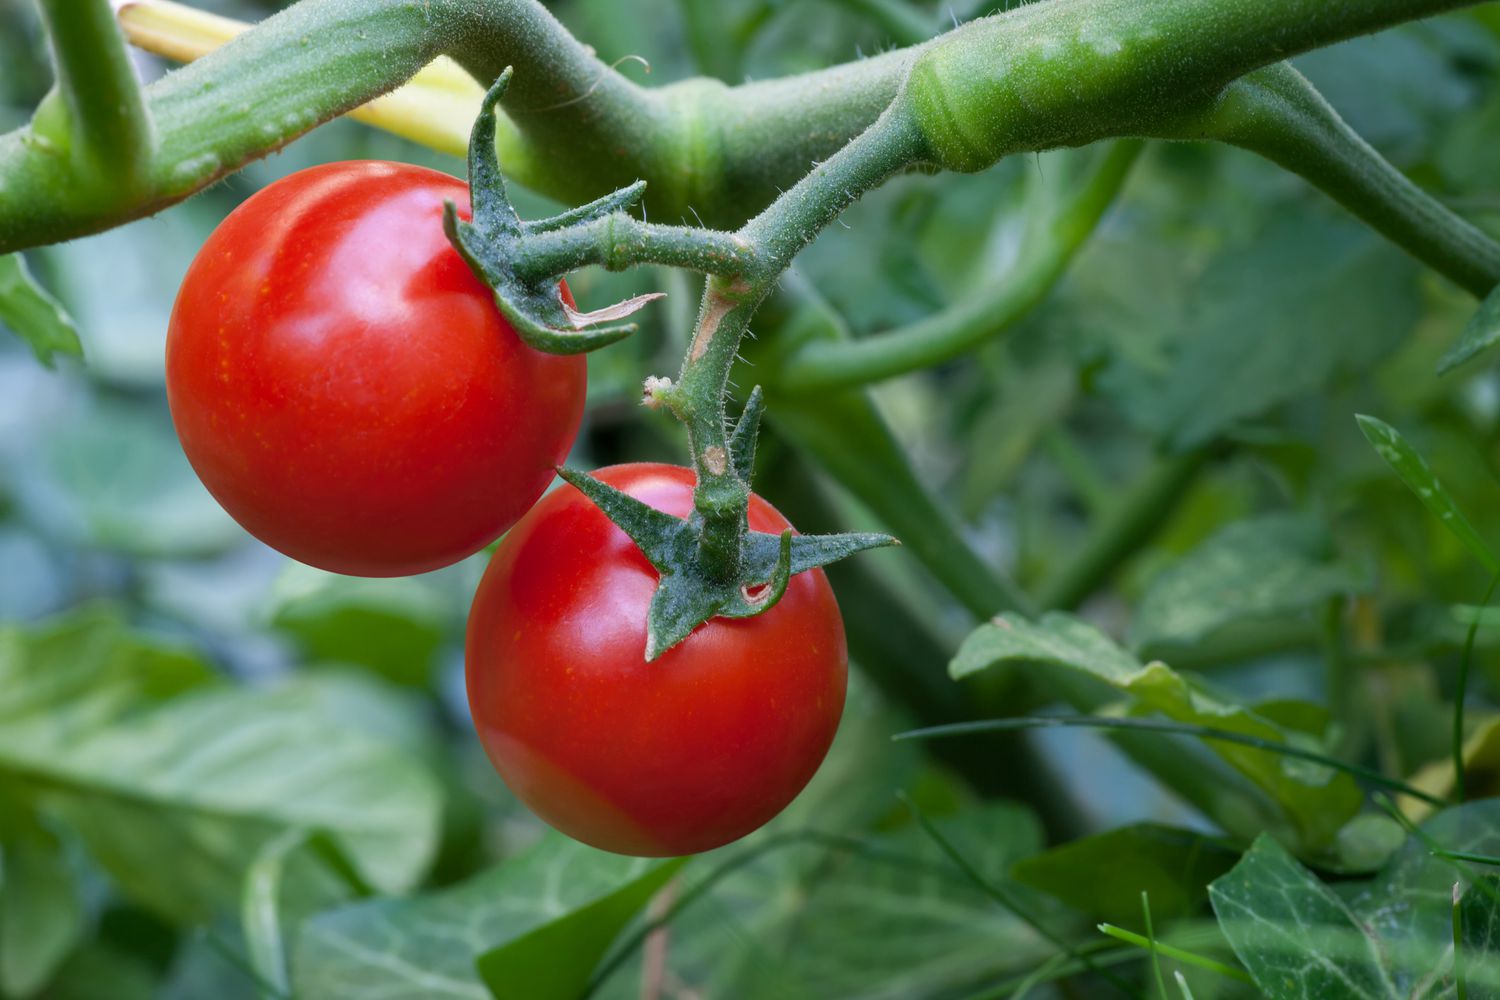 Tomates-cereja maduros prontos para serem colhidos